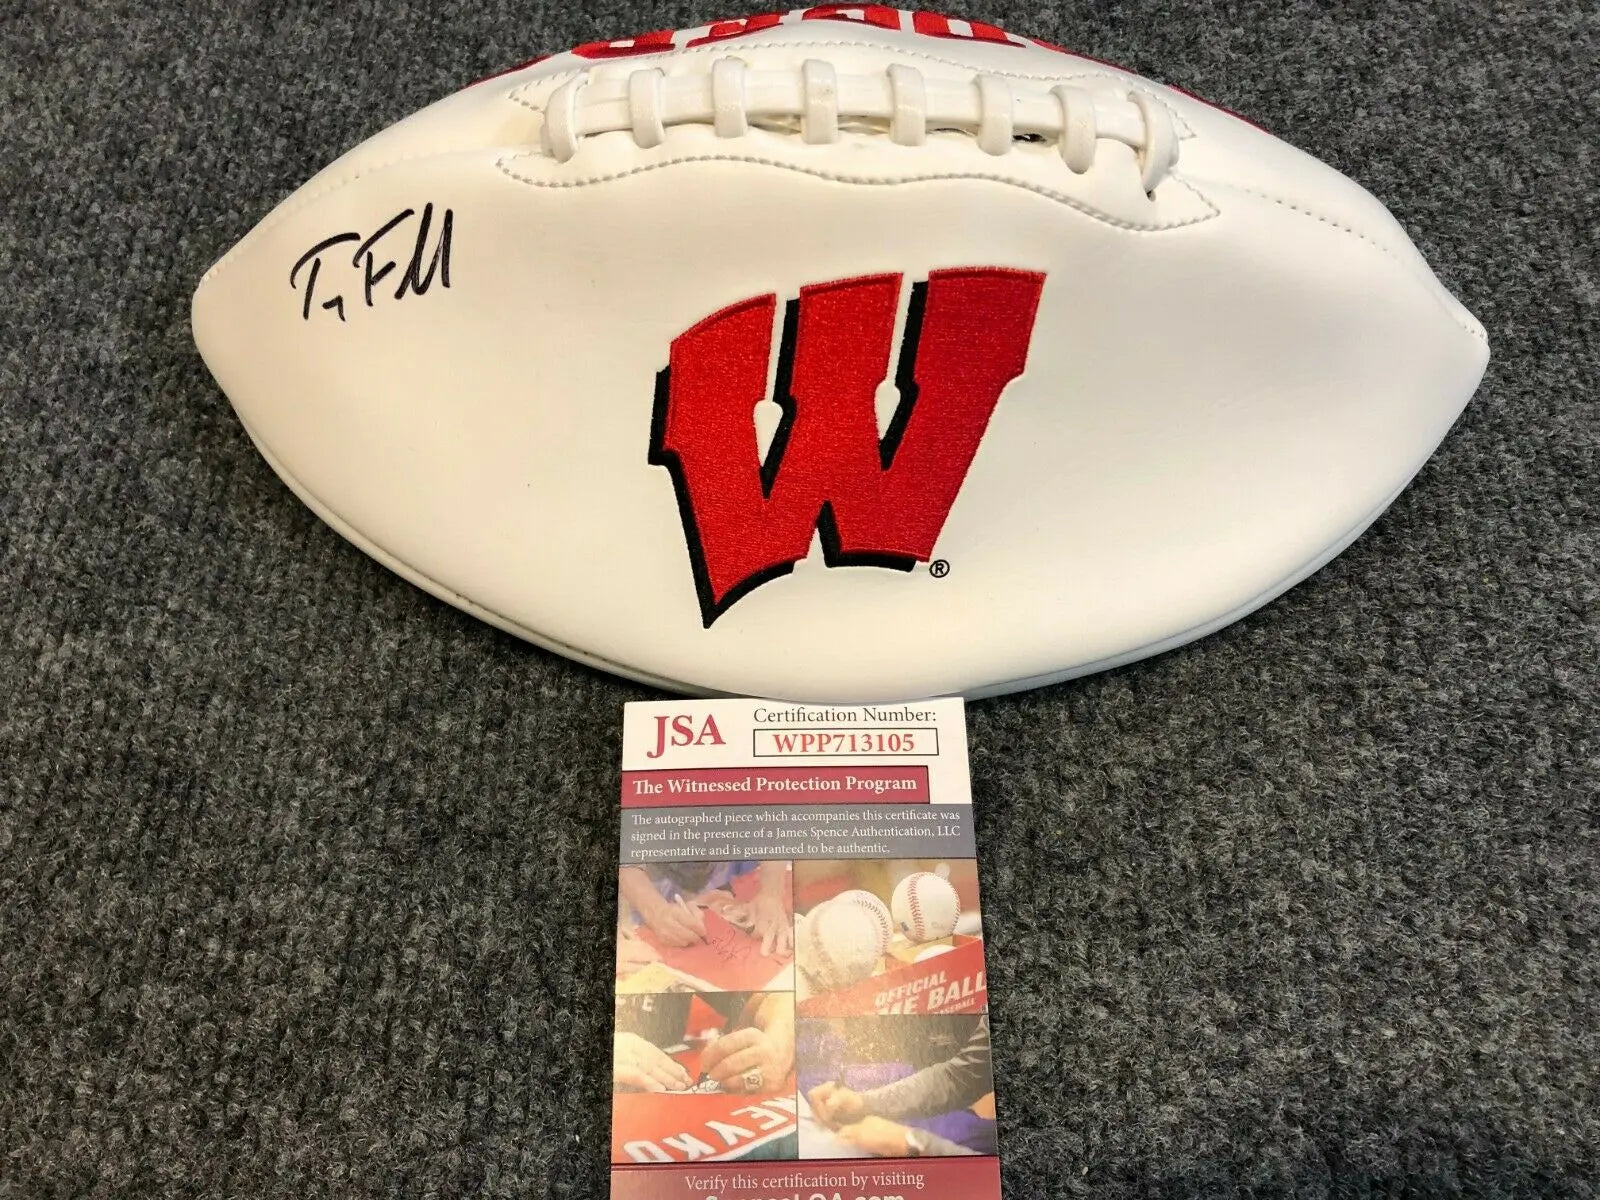 MVP Authentics Wisconsin Badgers Troy Fumagalli Autographed Signed Logo Football Jsa Coa 89.10 sports jersey framing , jersey framing